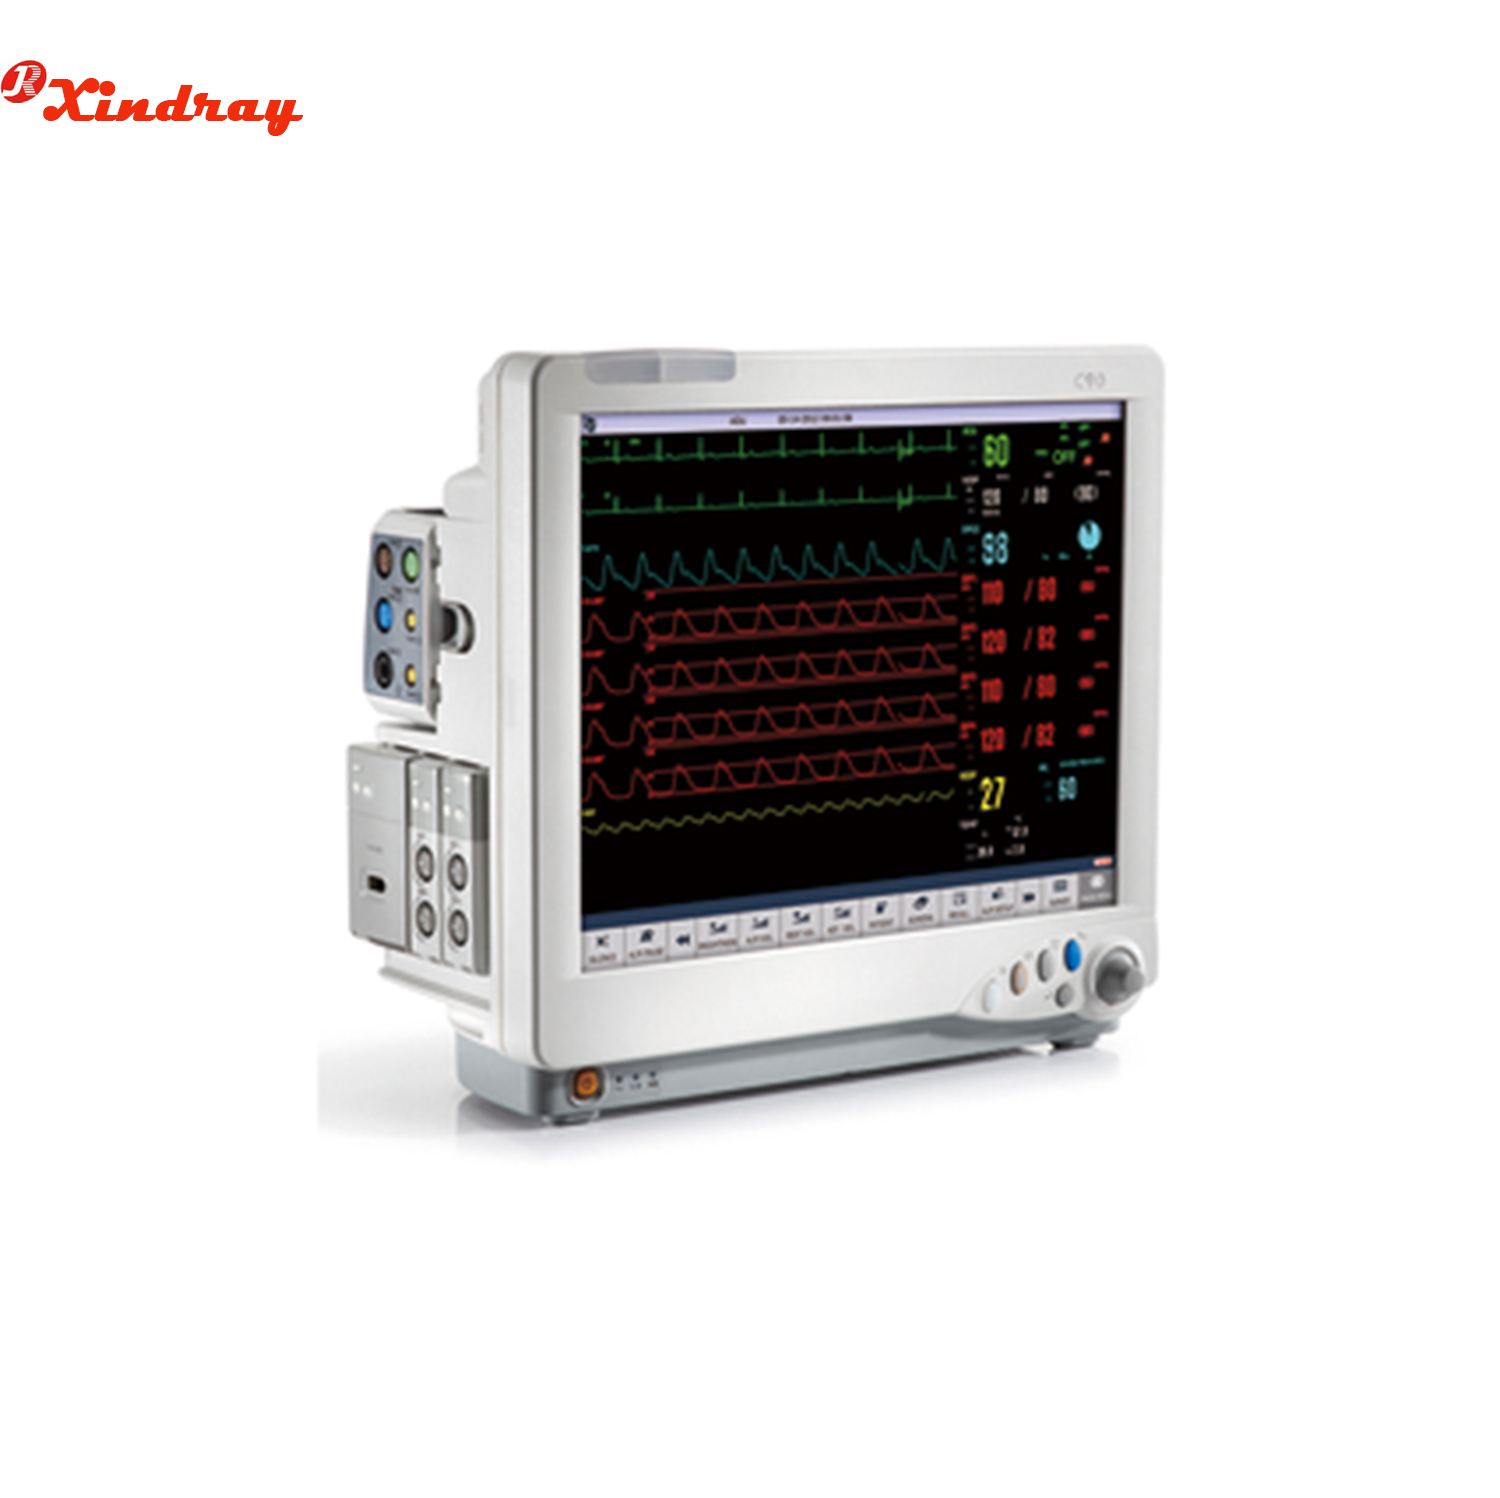 C90 patient monitor